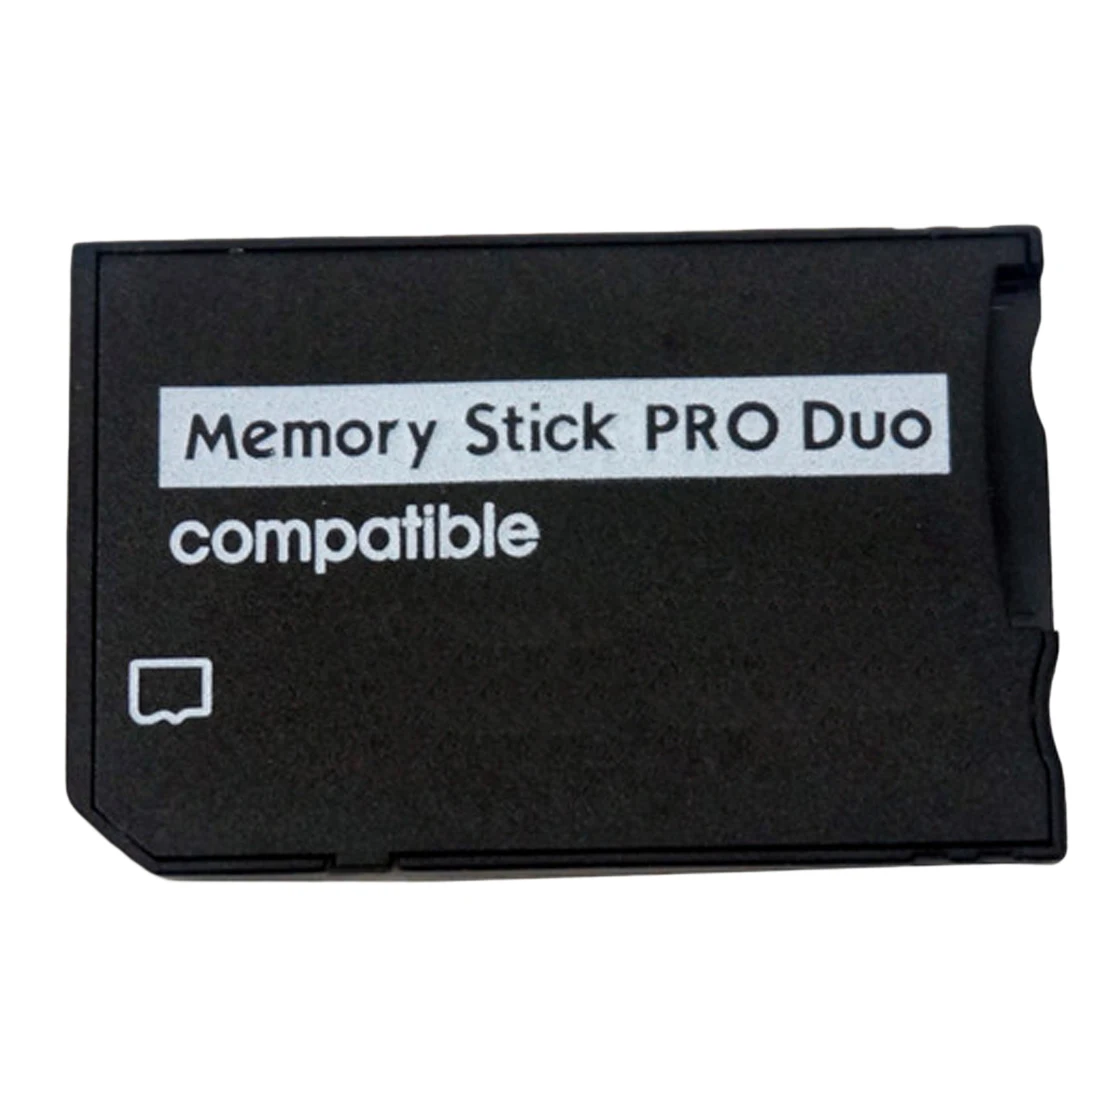 Mälukaart Adapteriga Micro SD Memory Stick Adapter Conventer Juhul Memory Stick Pro Duo Sony & PSP-Seeria 1MB-128GB